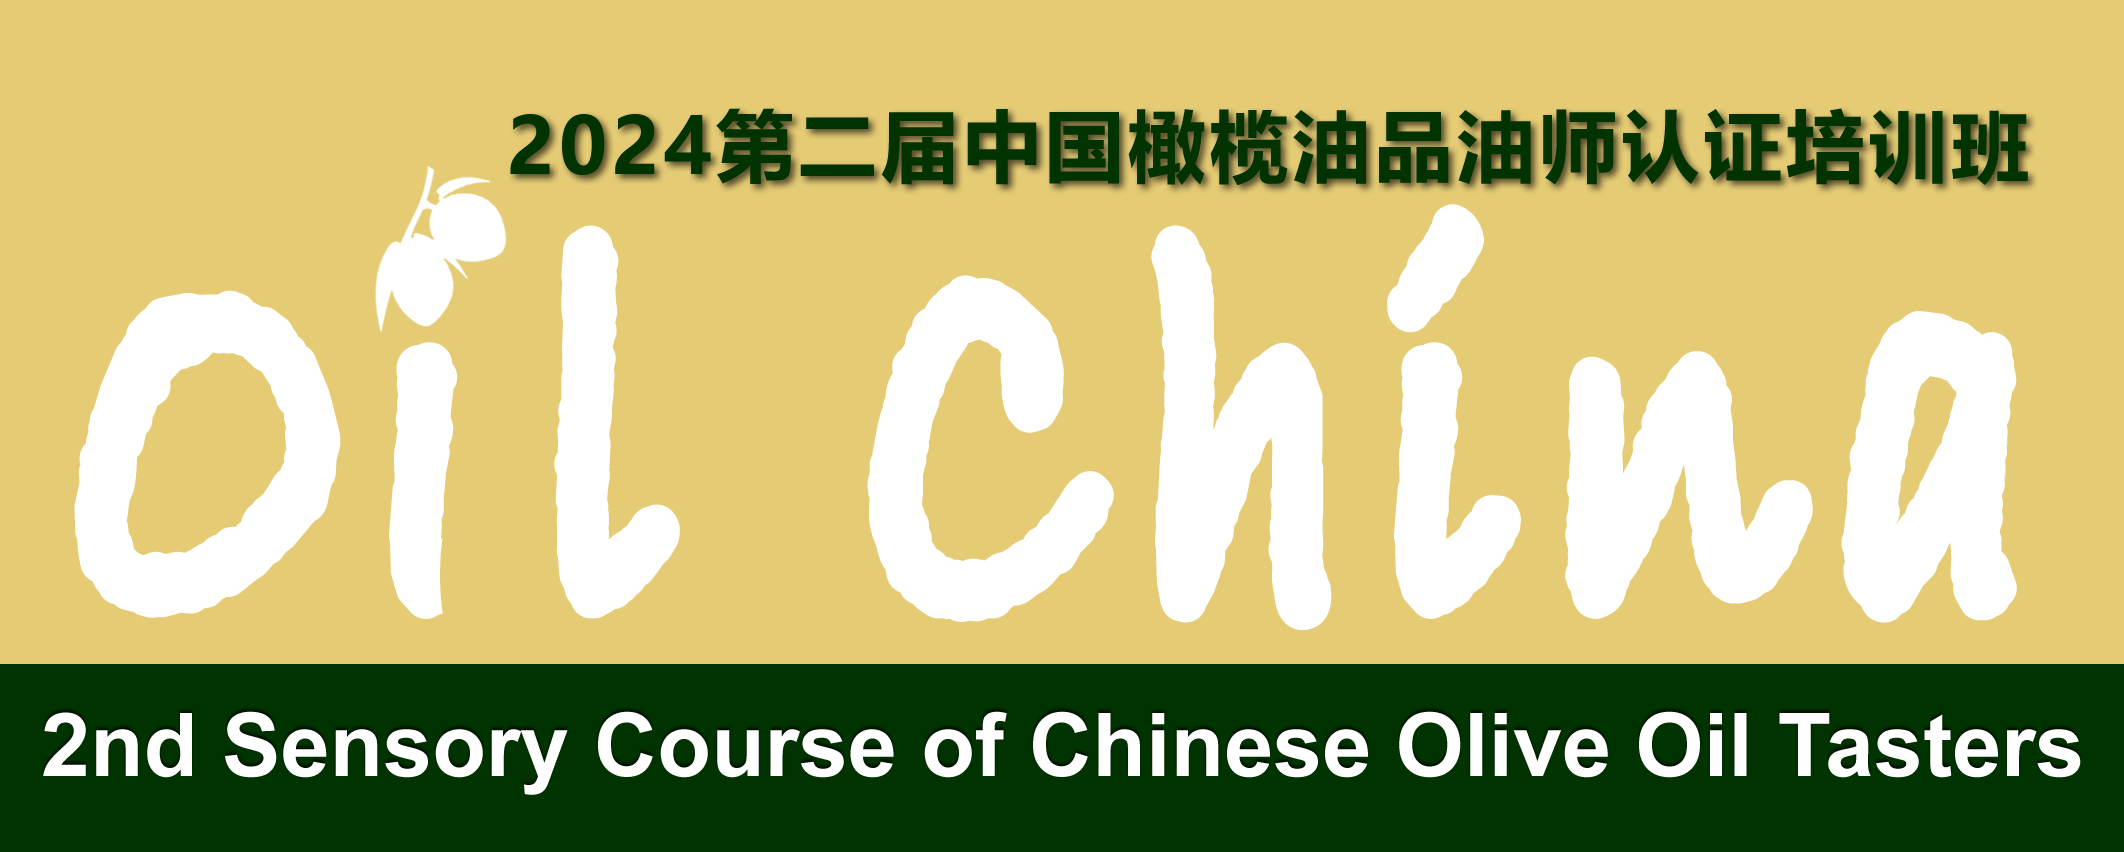 olive oil tasters logo